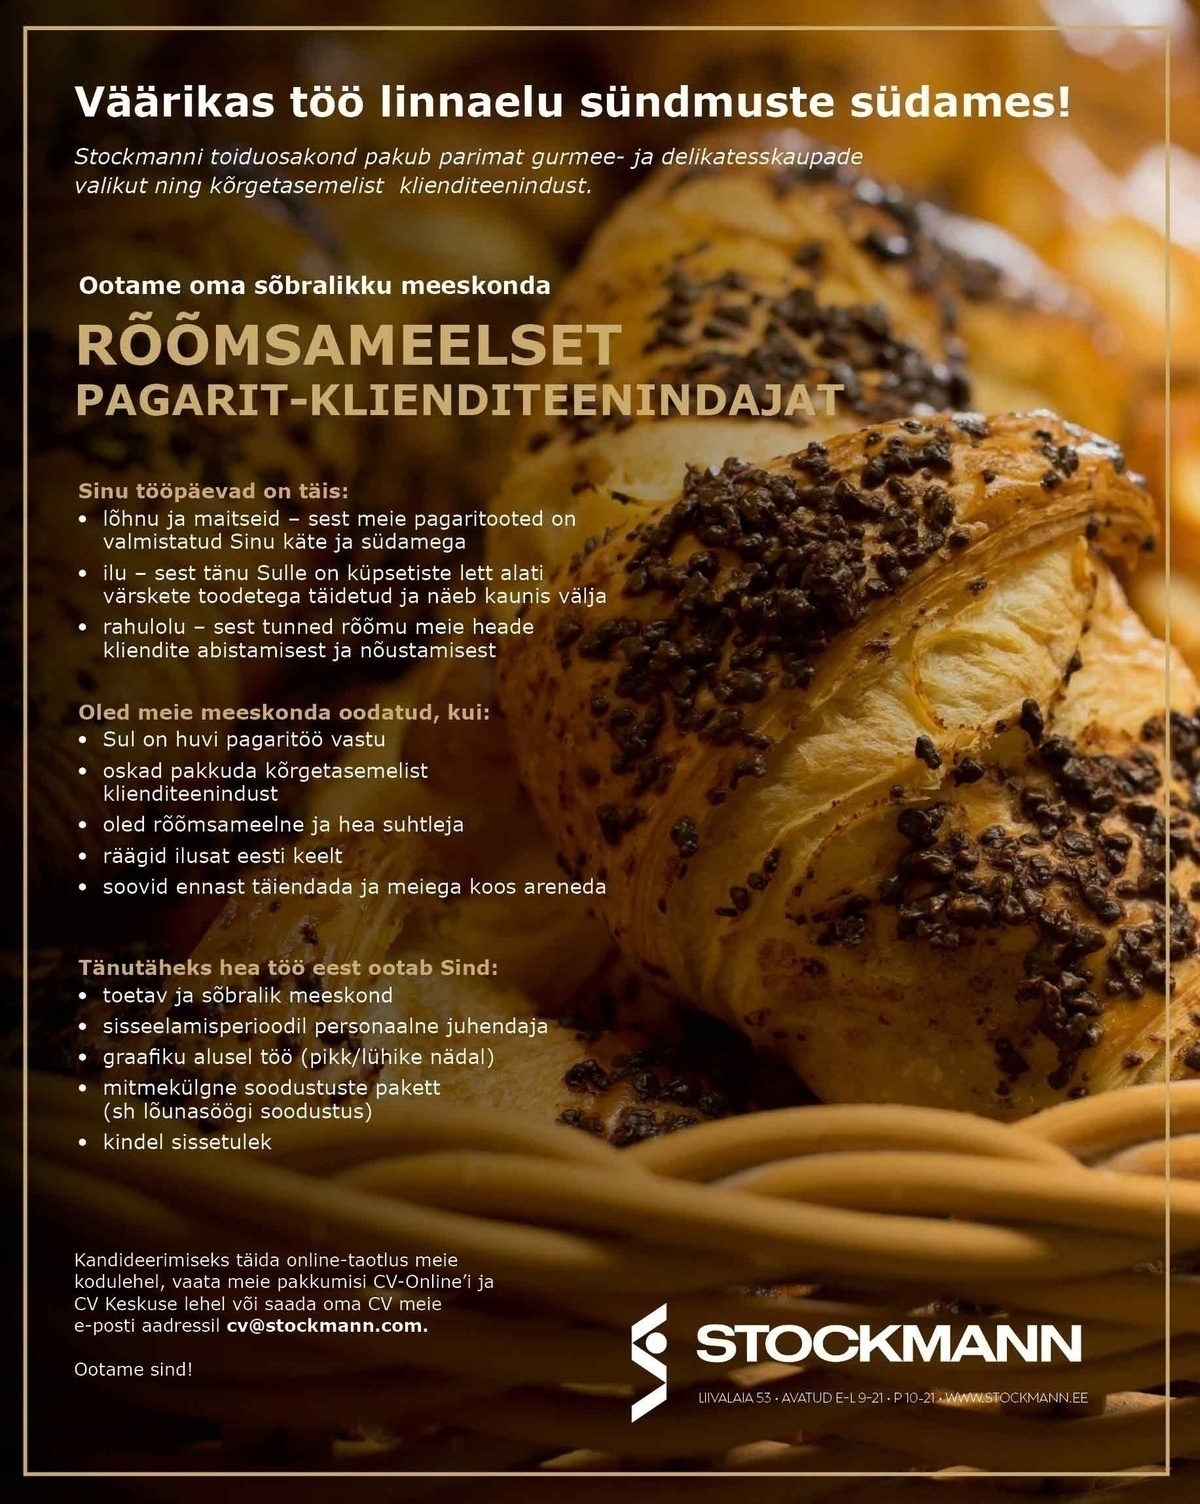 Stockmann AS Stockmanni pagar-klienditeenindaja